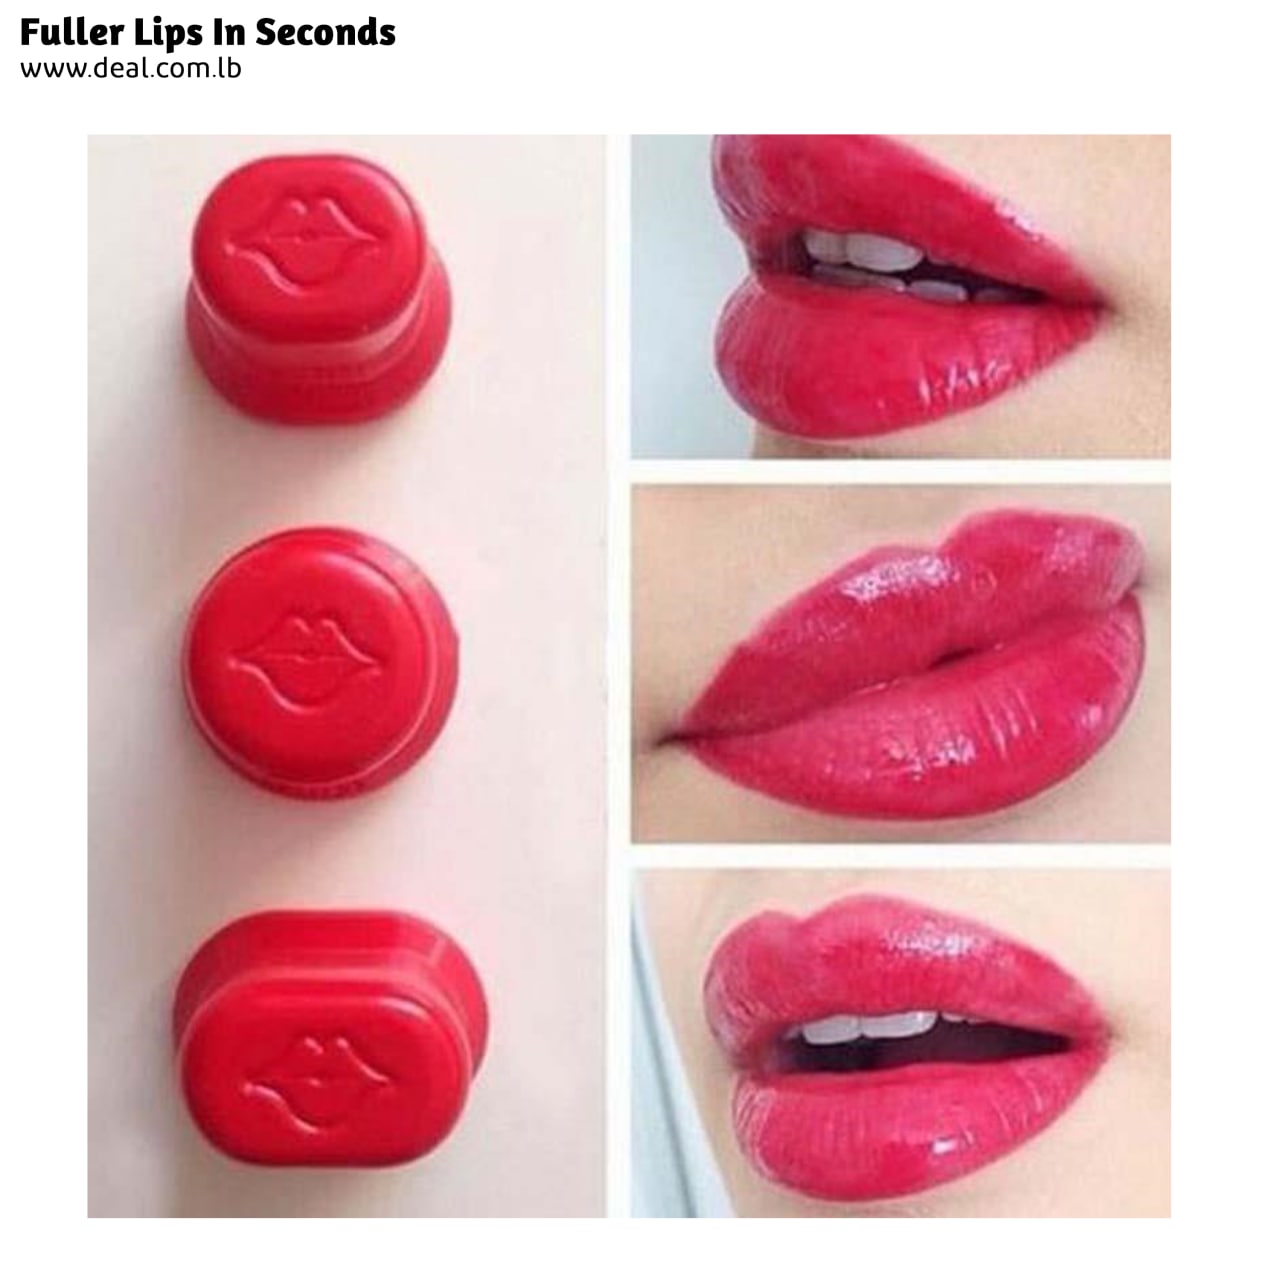 Fuller Lips In Seconds